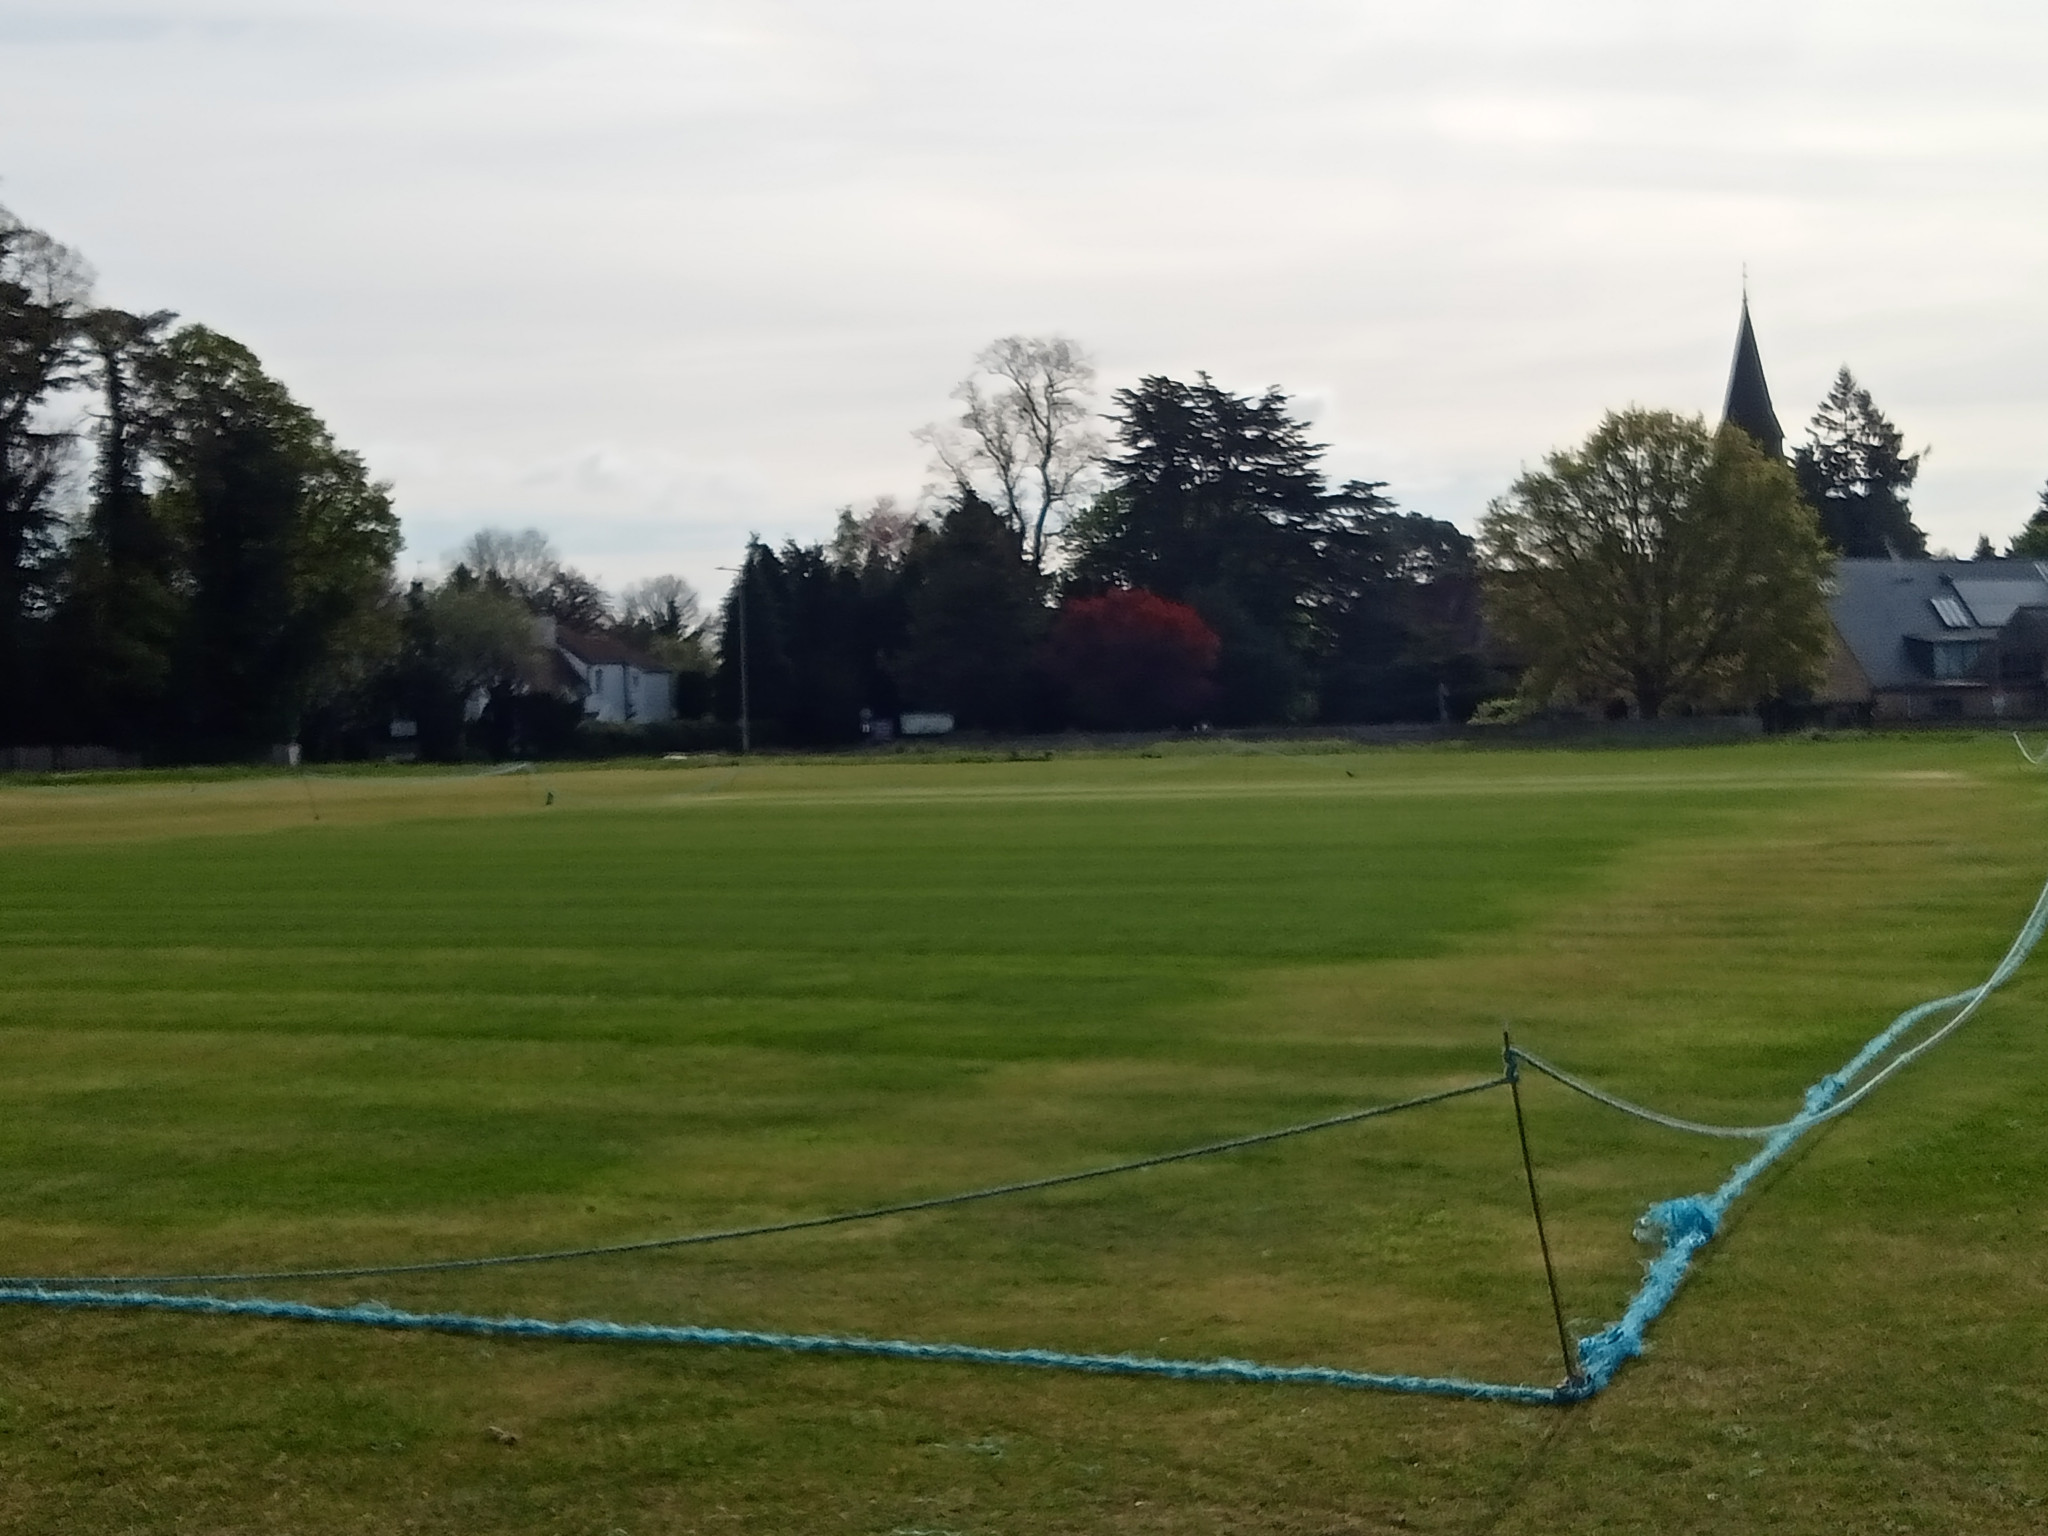 Christ Church, Chorleywood, overlooking the Chorleywood Cricket Club pitch ©ITG